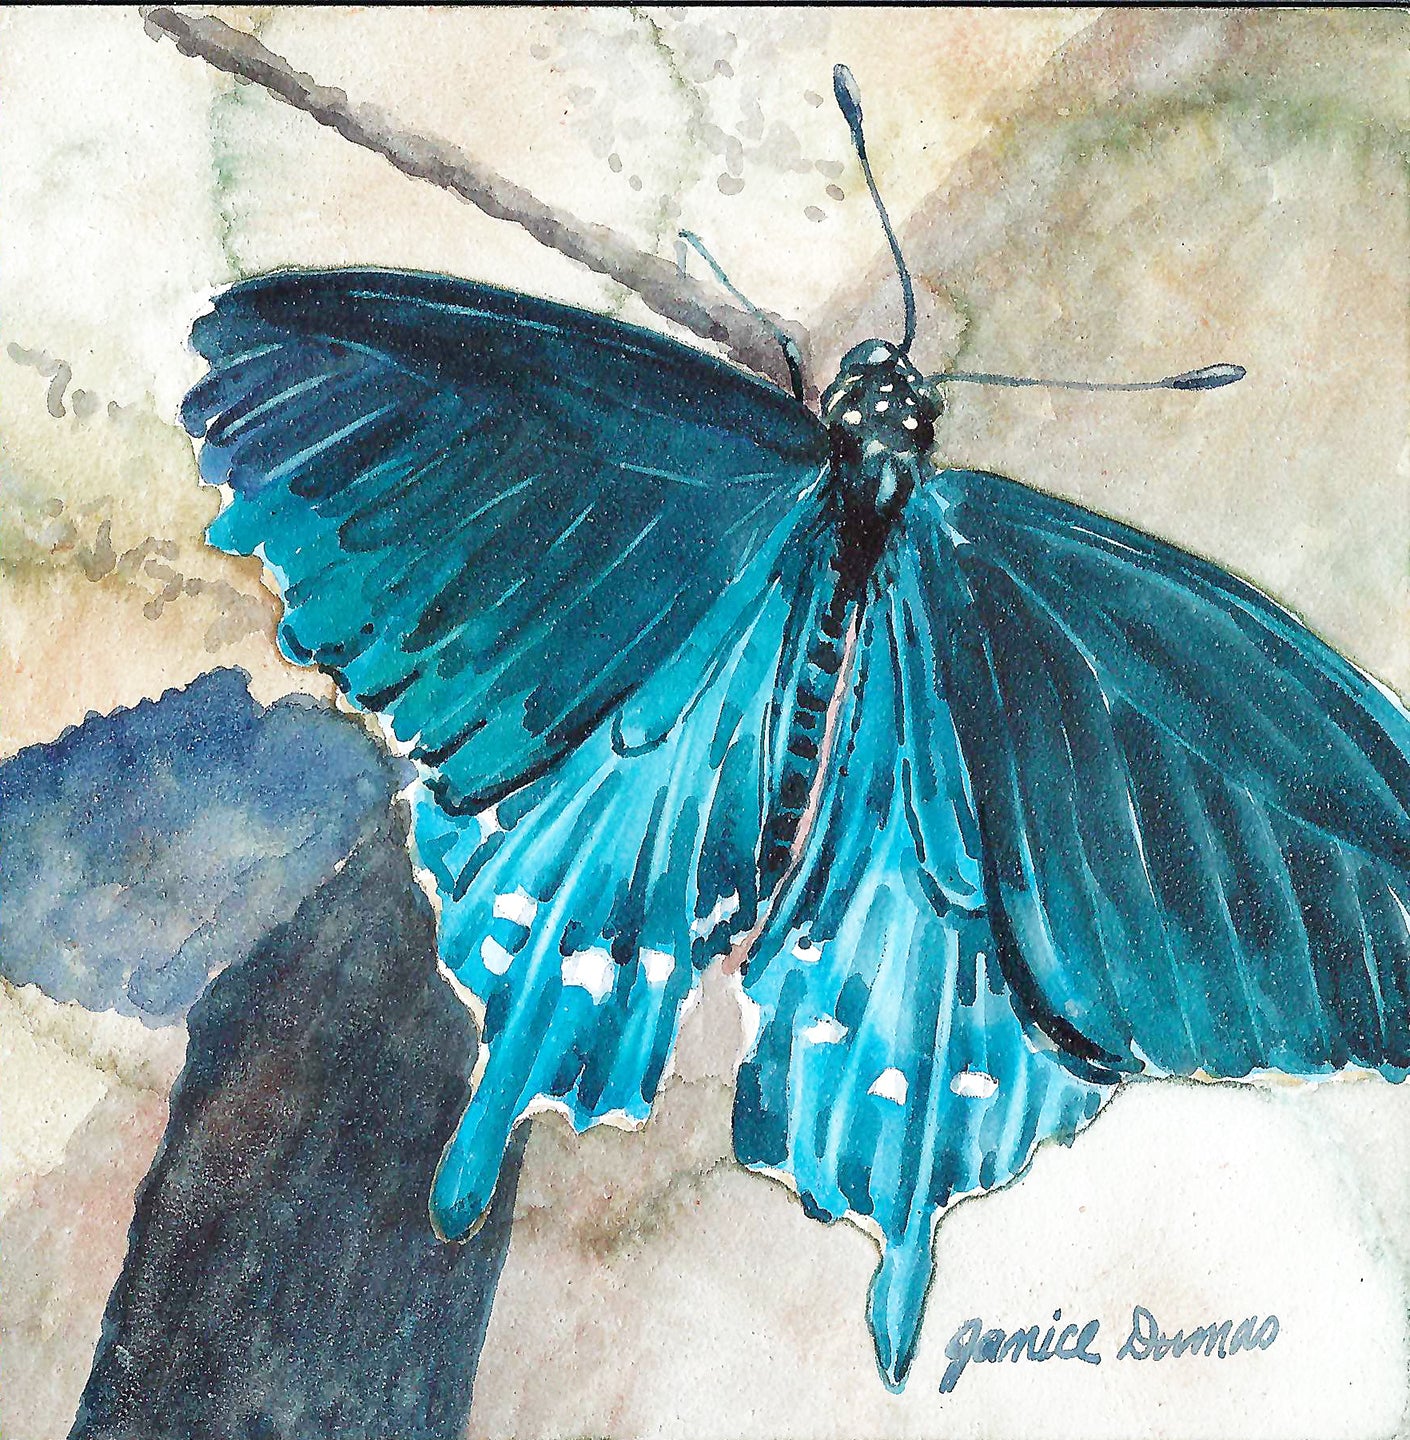 SwallowTail is an original watercolor on aquaboard by Michigan Artist Janice Dumas.